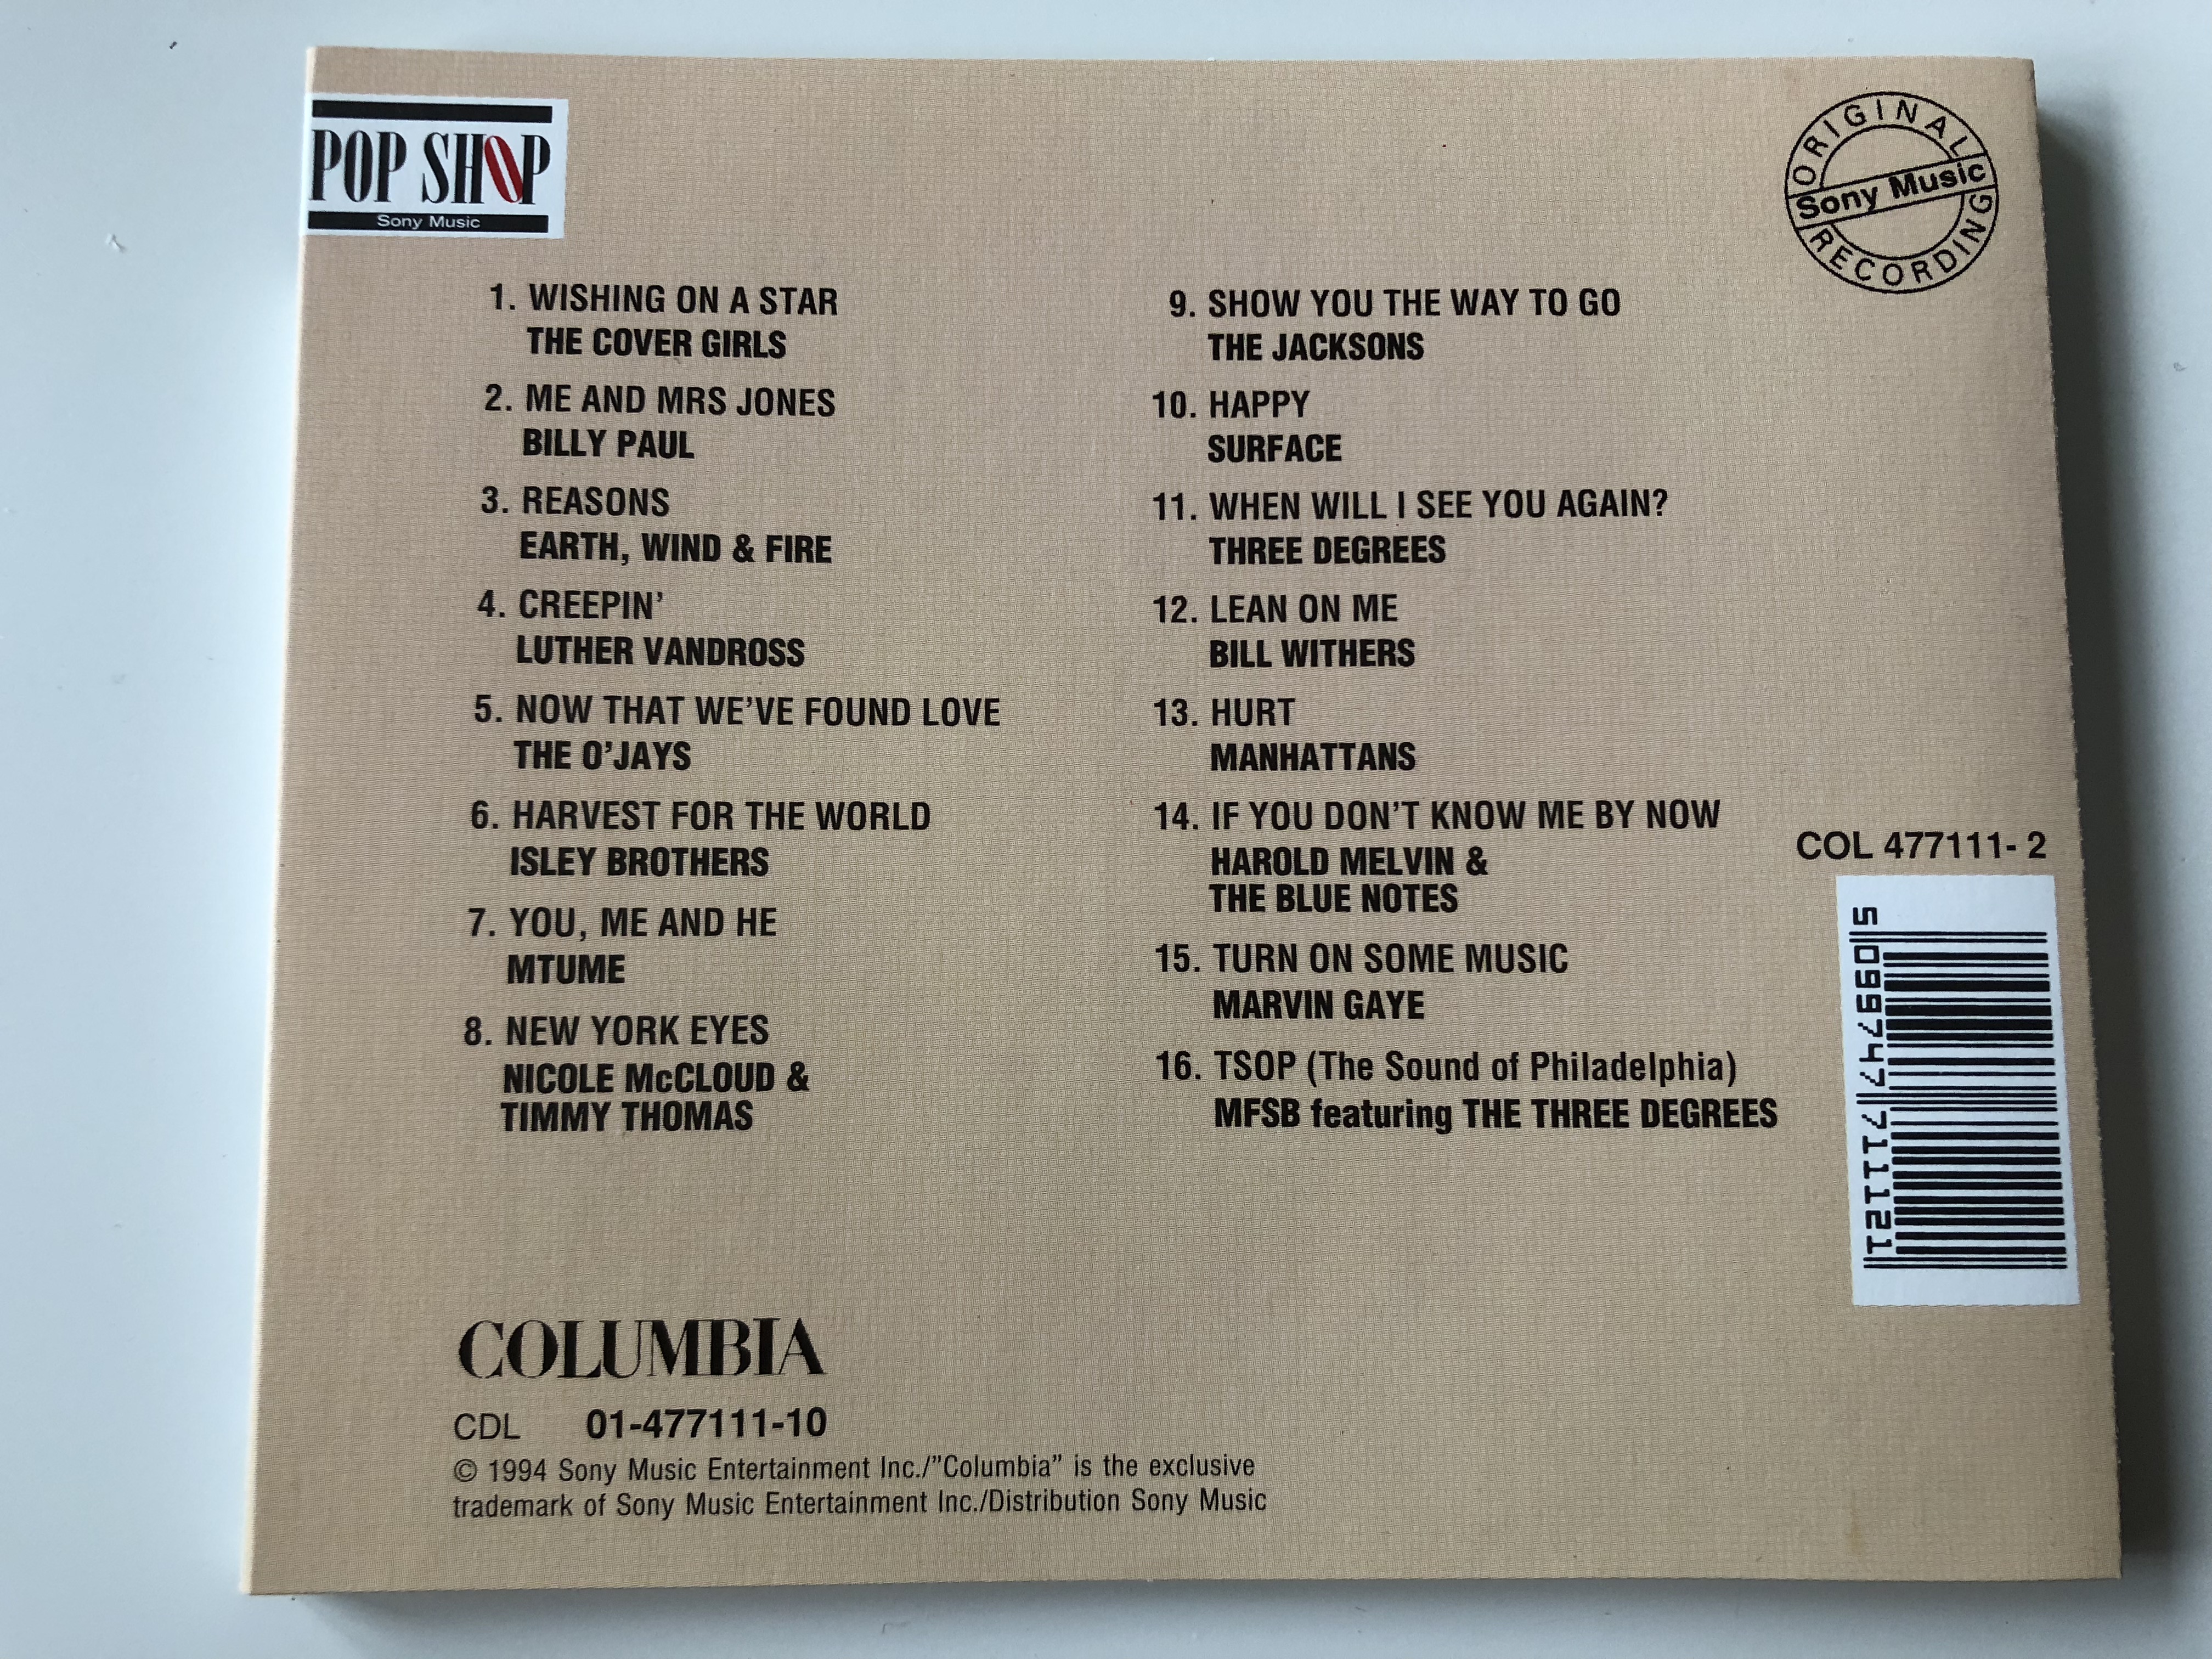 -soul-moods-vol.-3-wishing-on-a-star-me-and-mrs.-jones-reasons-creepin-audio-cd-1994-columbia-4-.jpg